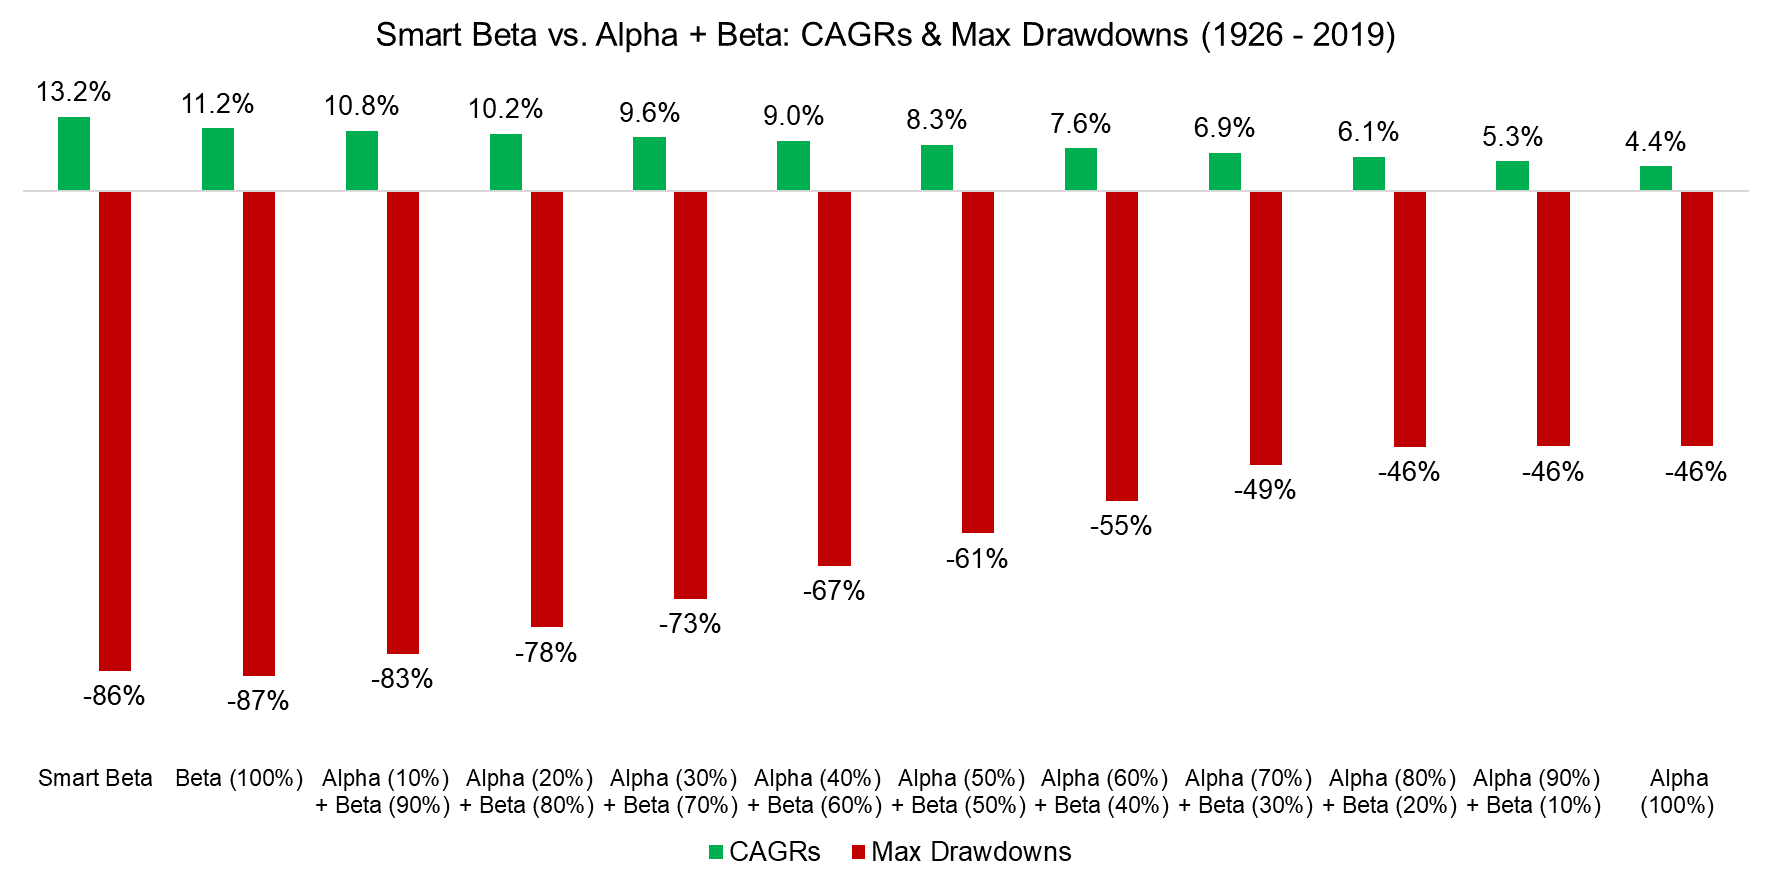 Smart Beta vs. Alpha + Beta CAGRs & Max Drawdowns (1926 - 2019)